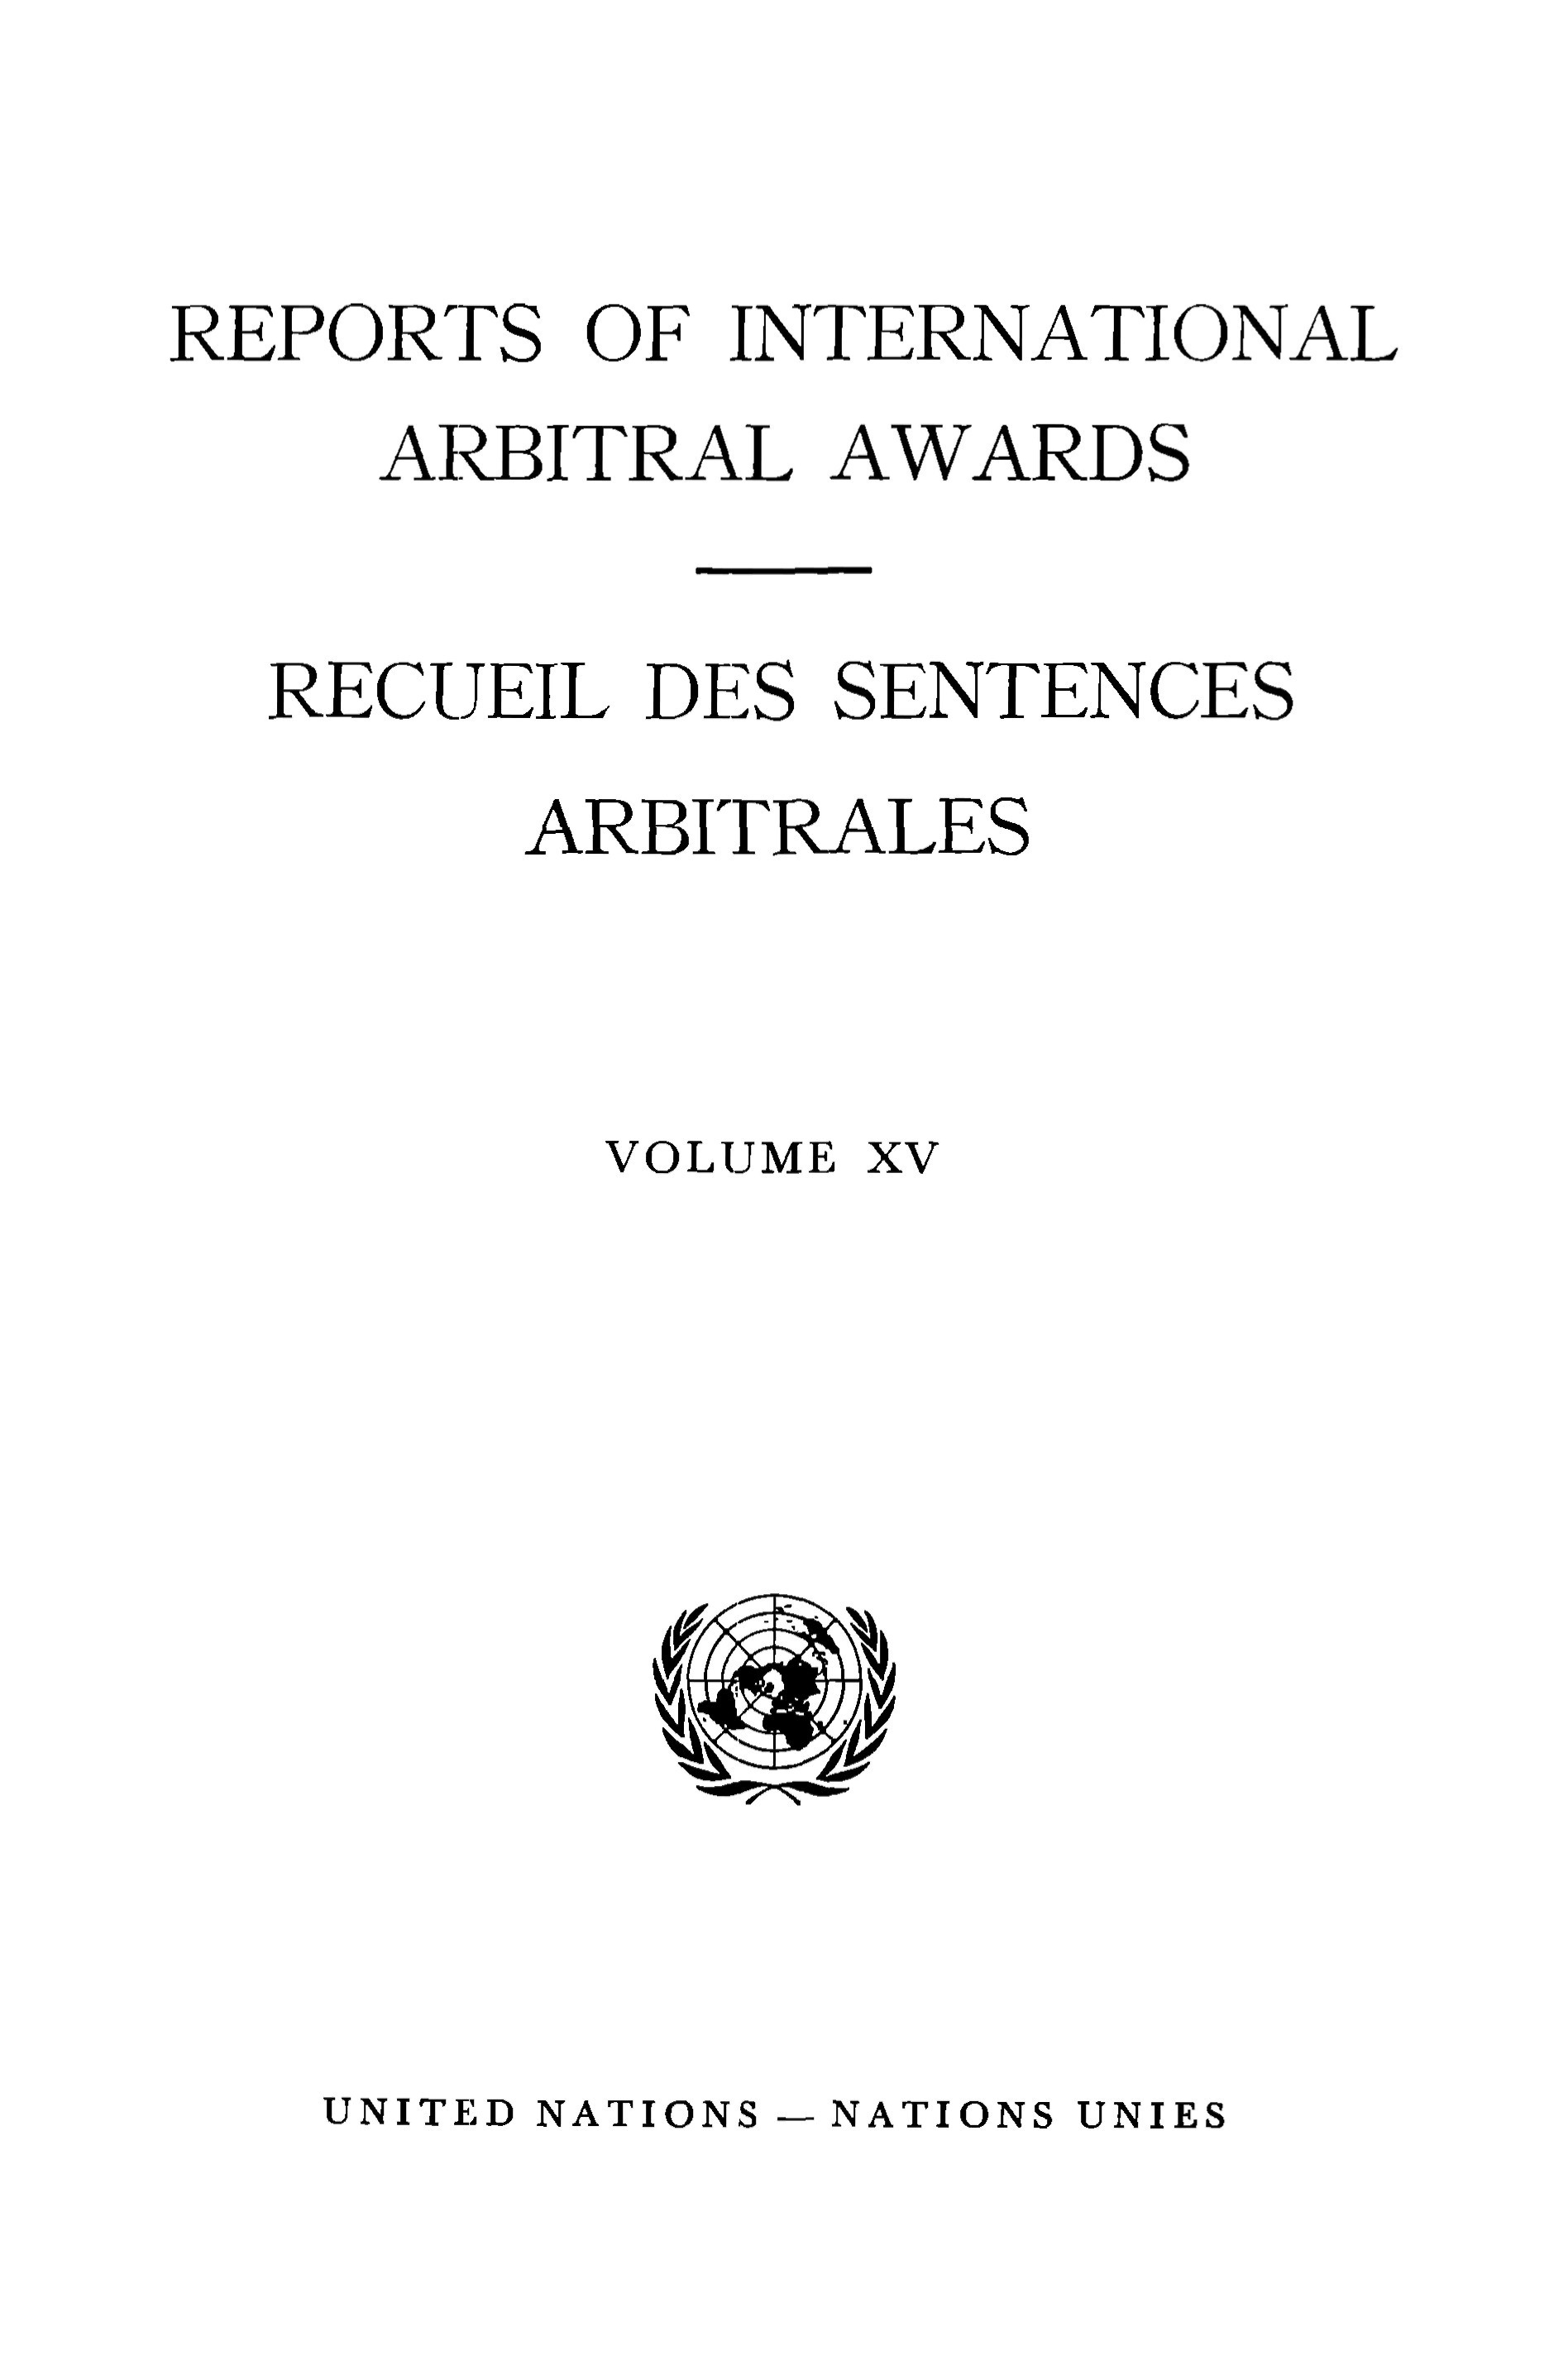 image of Recueil des sentences arbitrales, vol. XV